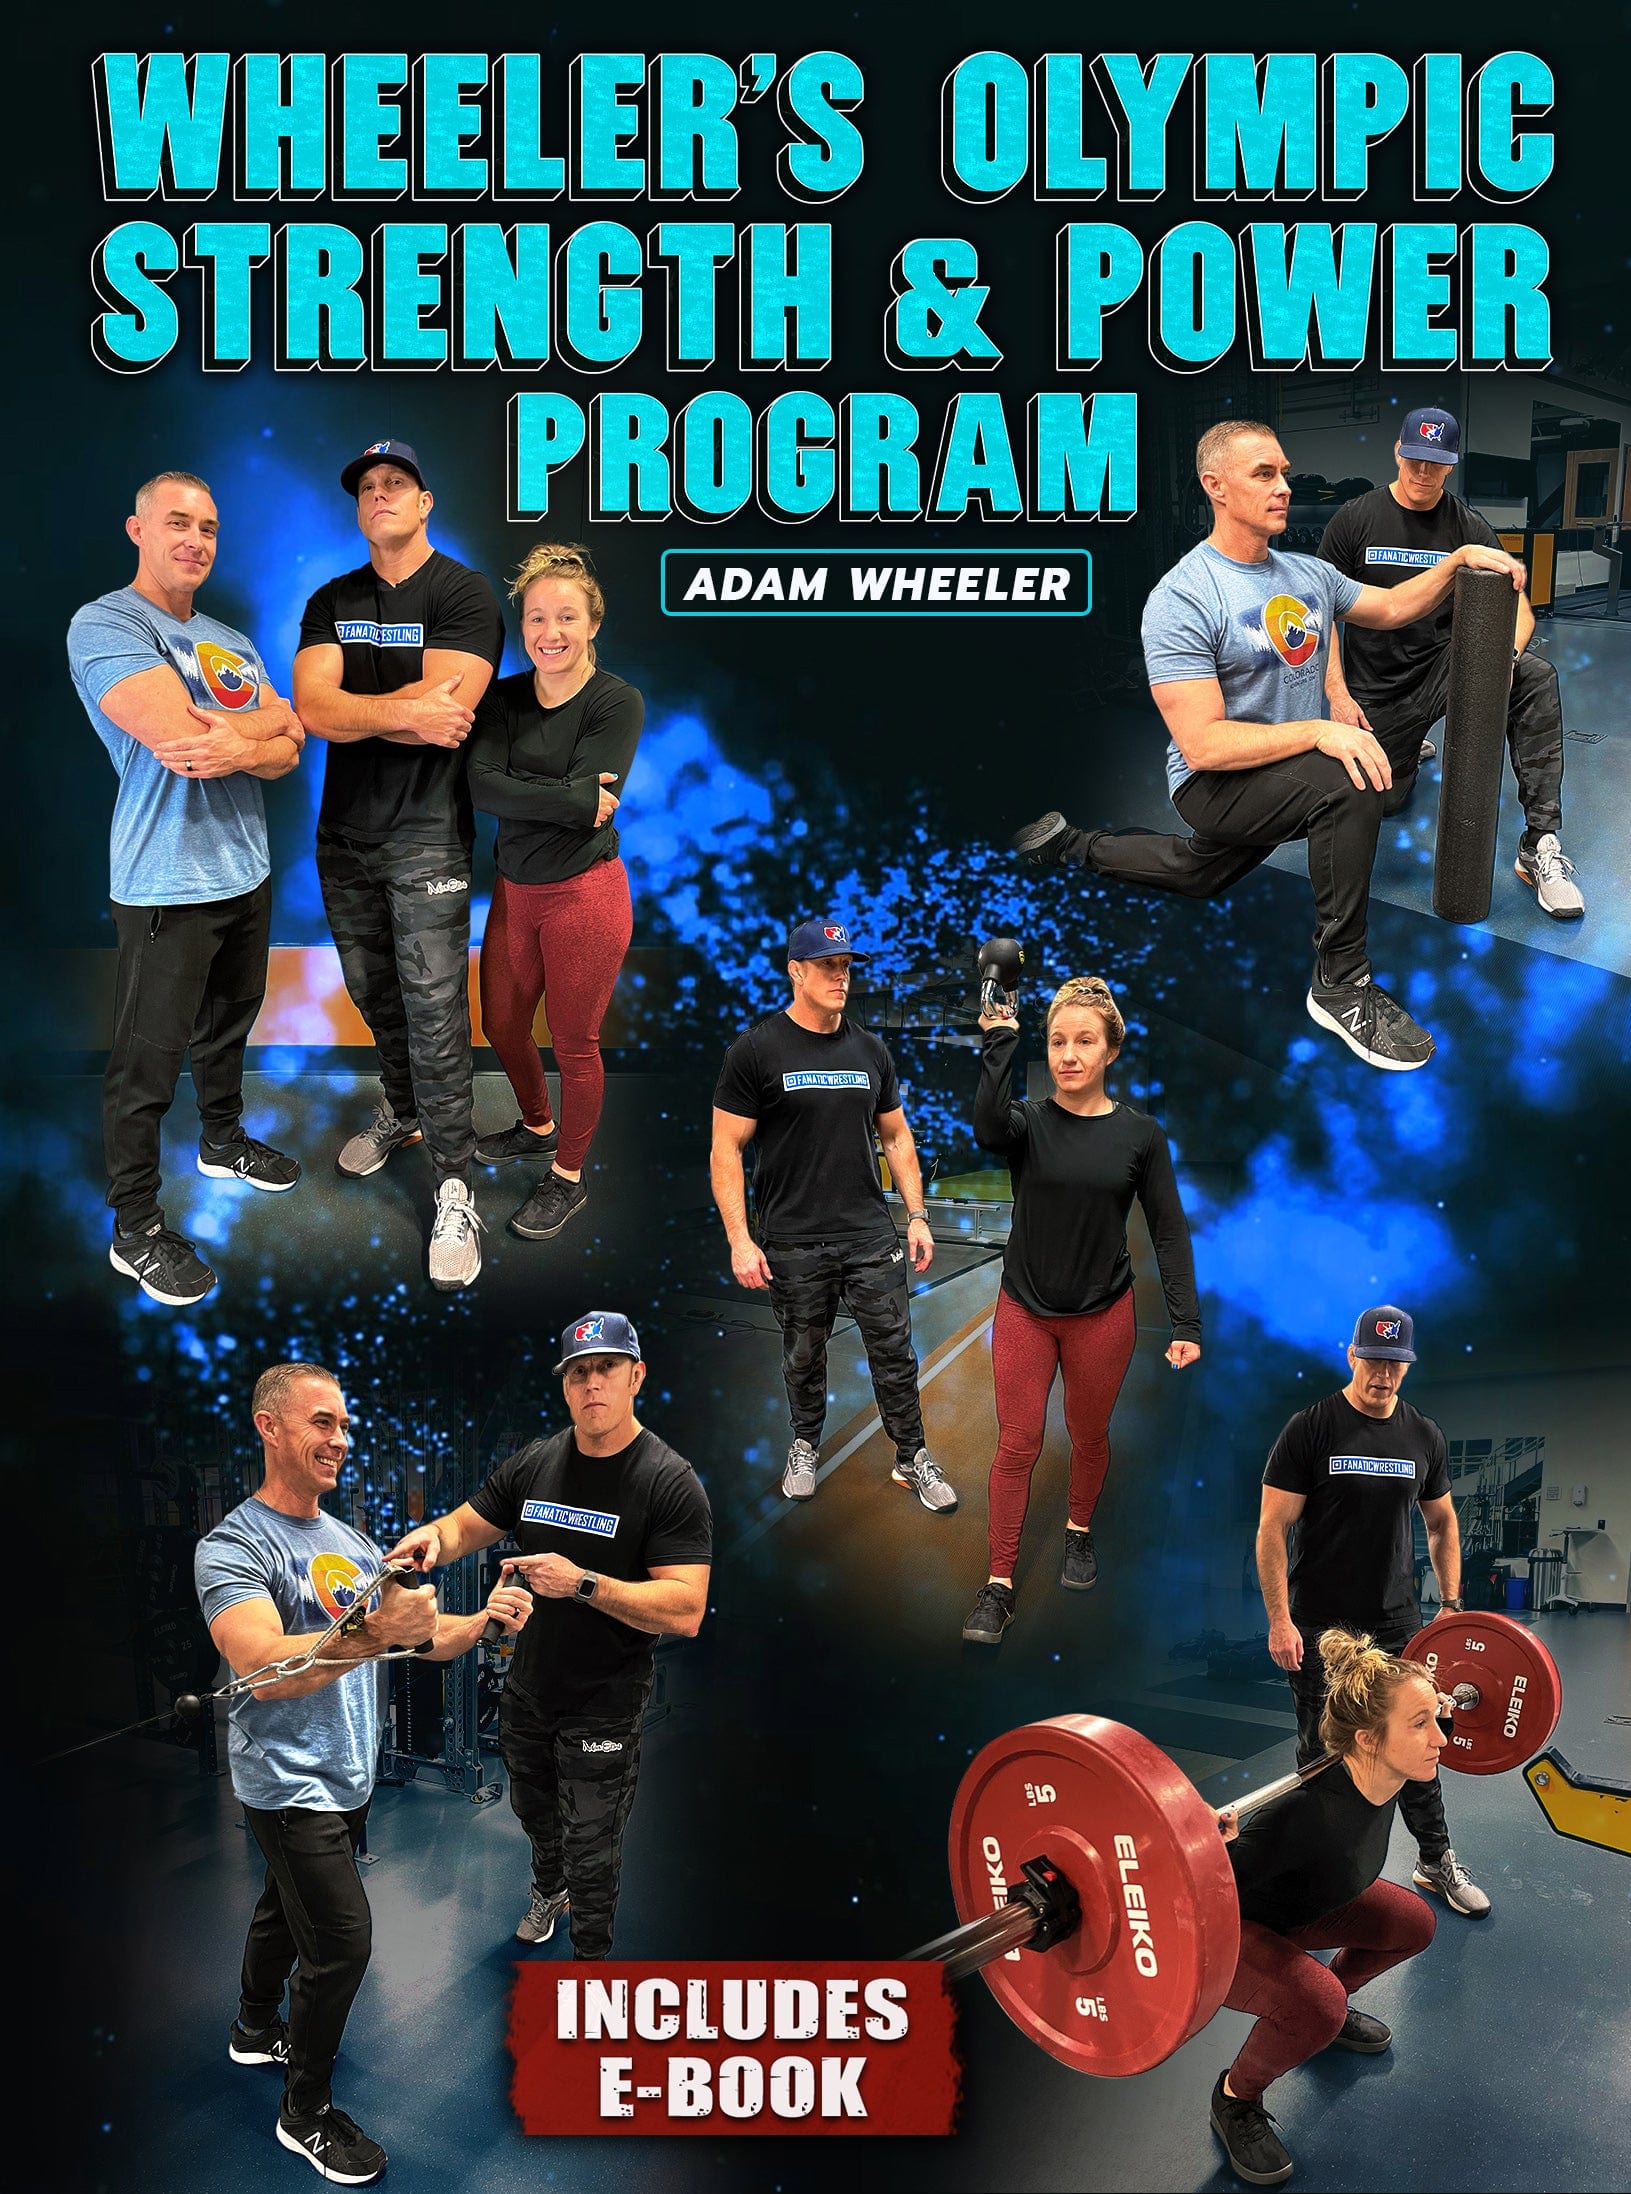 Wheelers Olympic Strength and Power Program by Adam Wheeler - Fanatic Wrestling